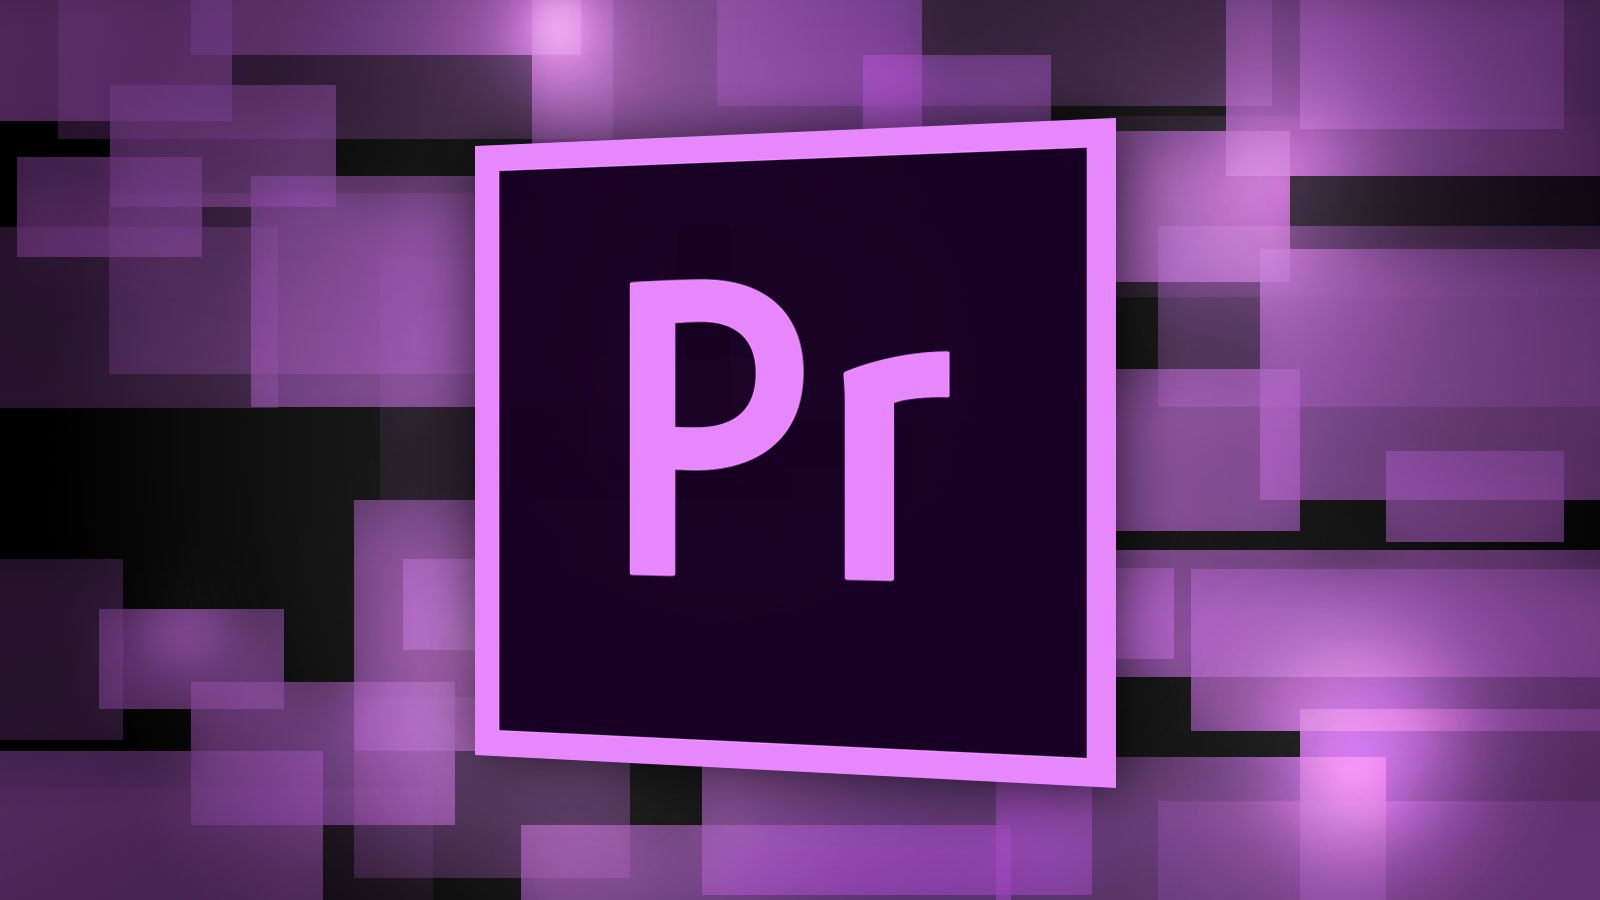 Adobe Premiere Pro 2024 downloading